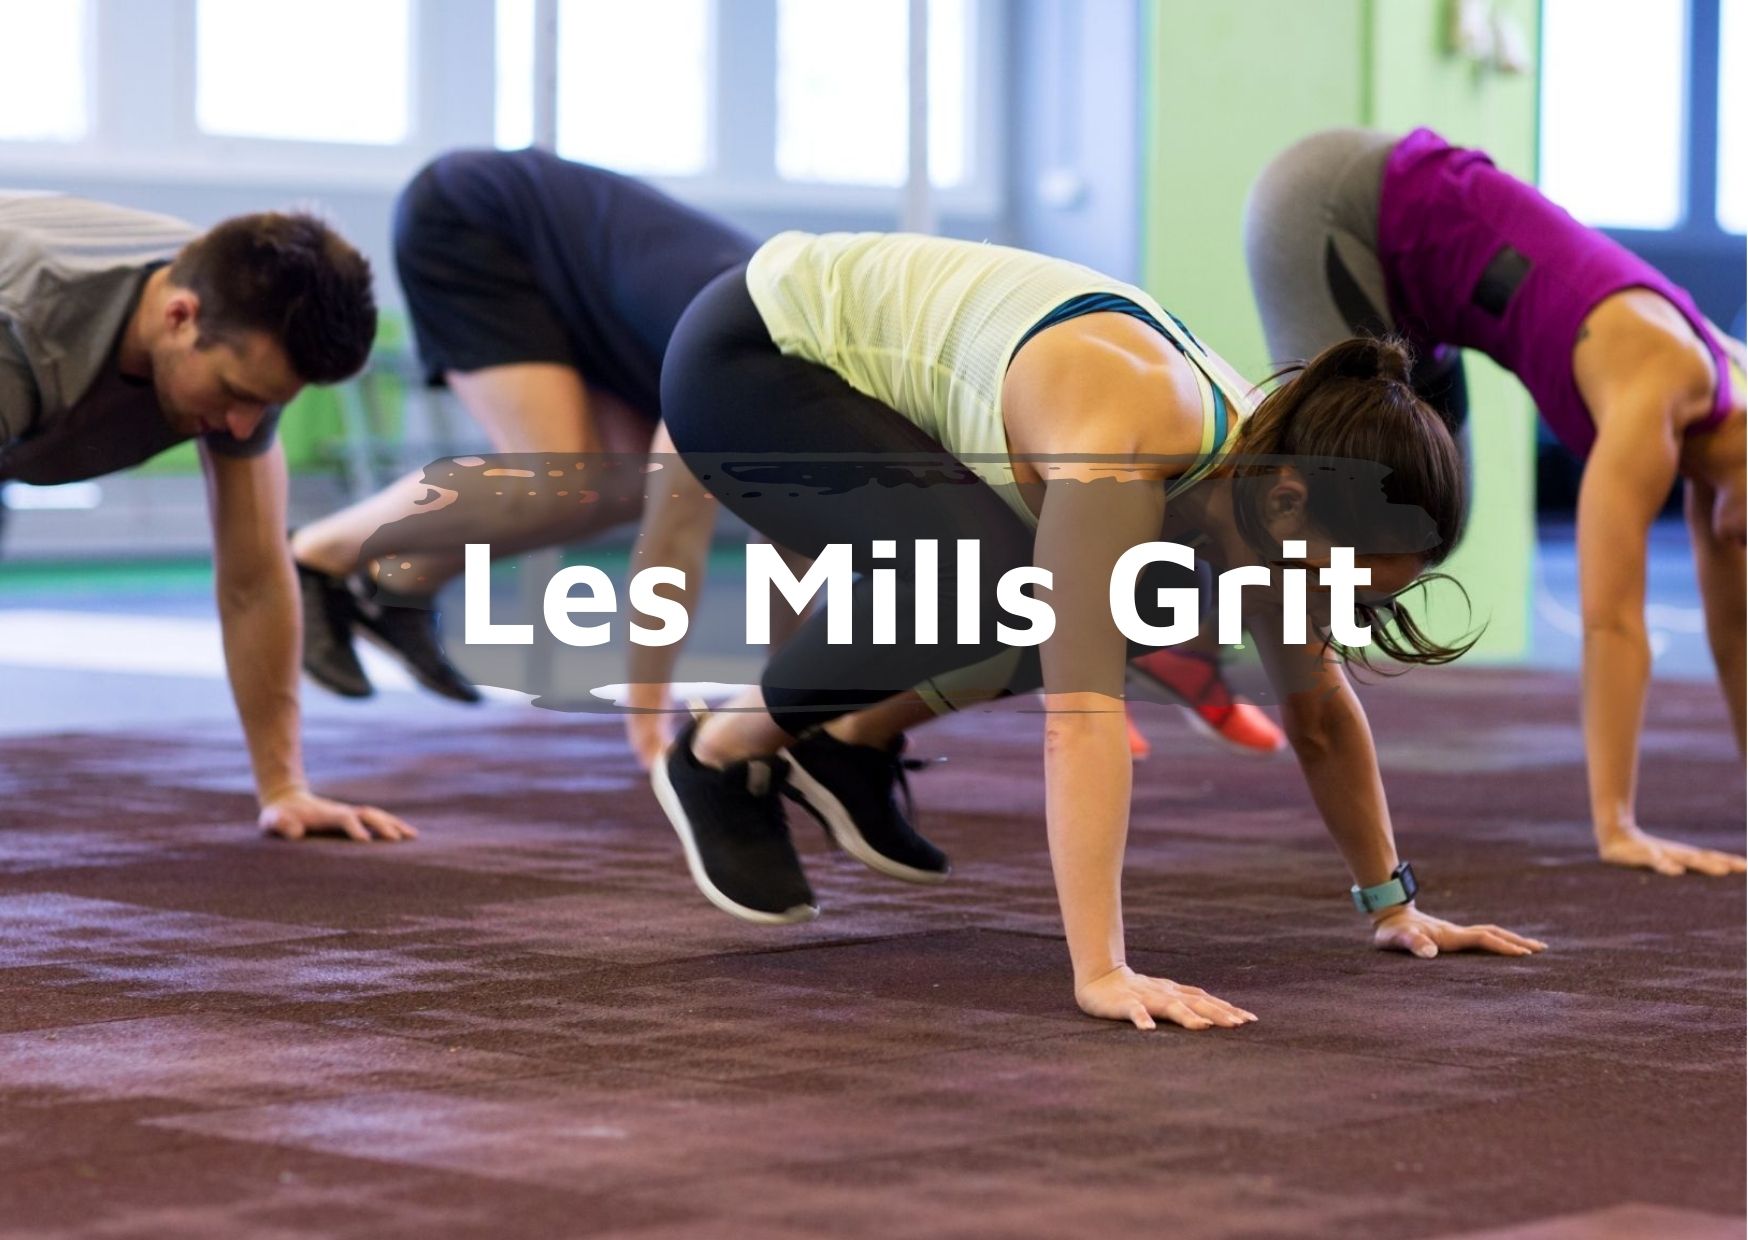 Less Mills Grit actividades